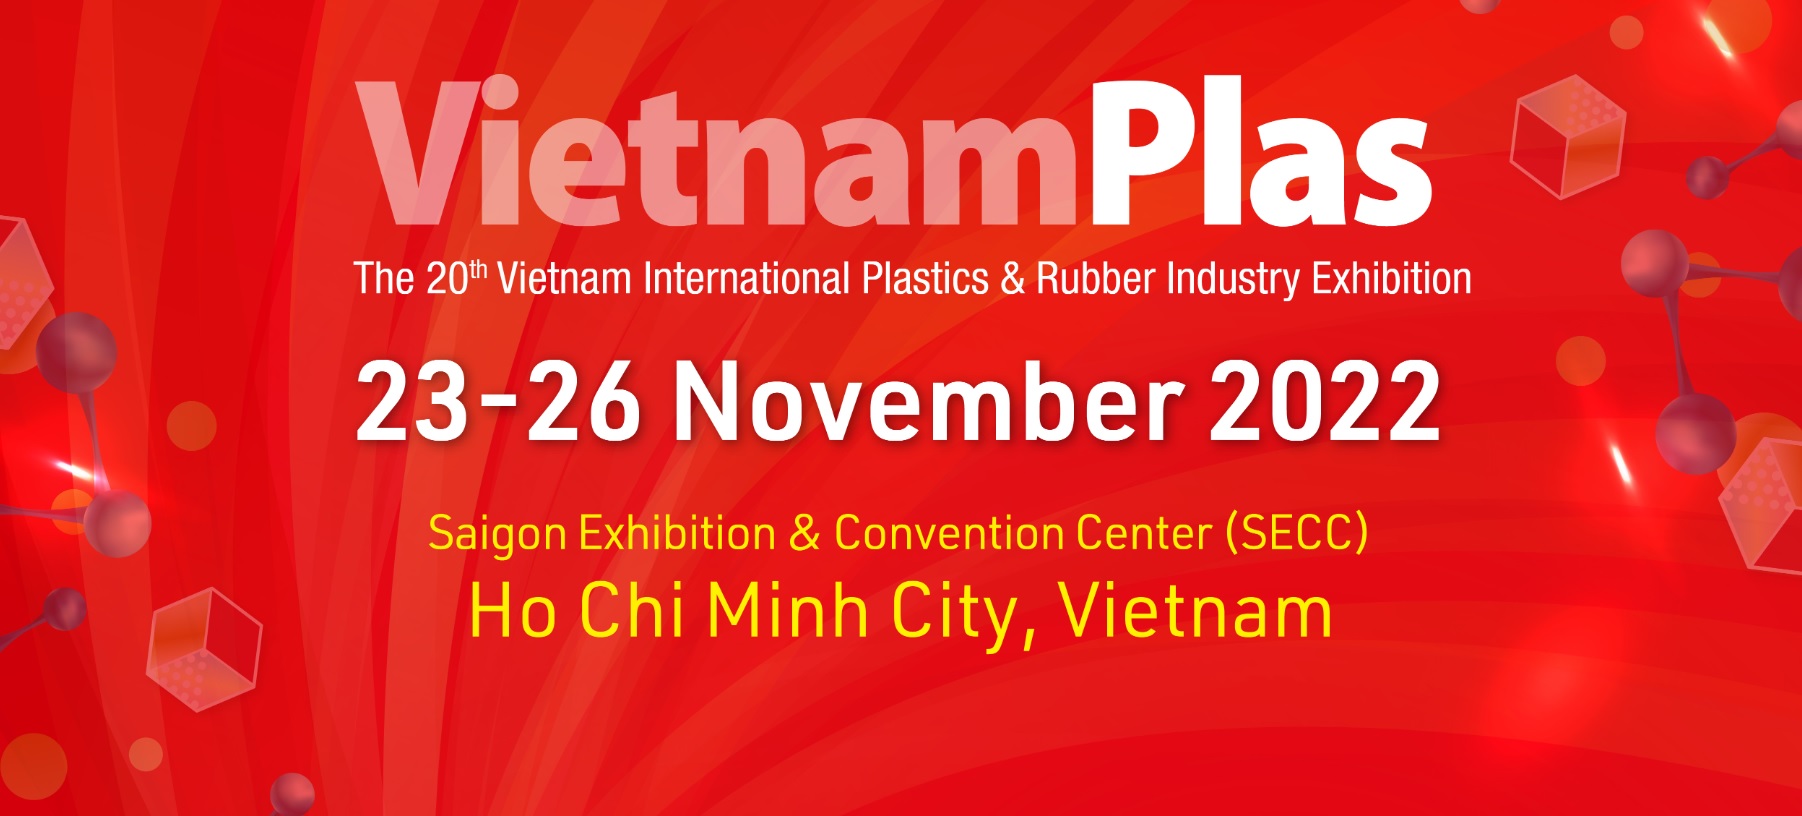 The 2022 20th Vietnam International Plastic & Rubber Industry Exhibition.